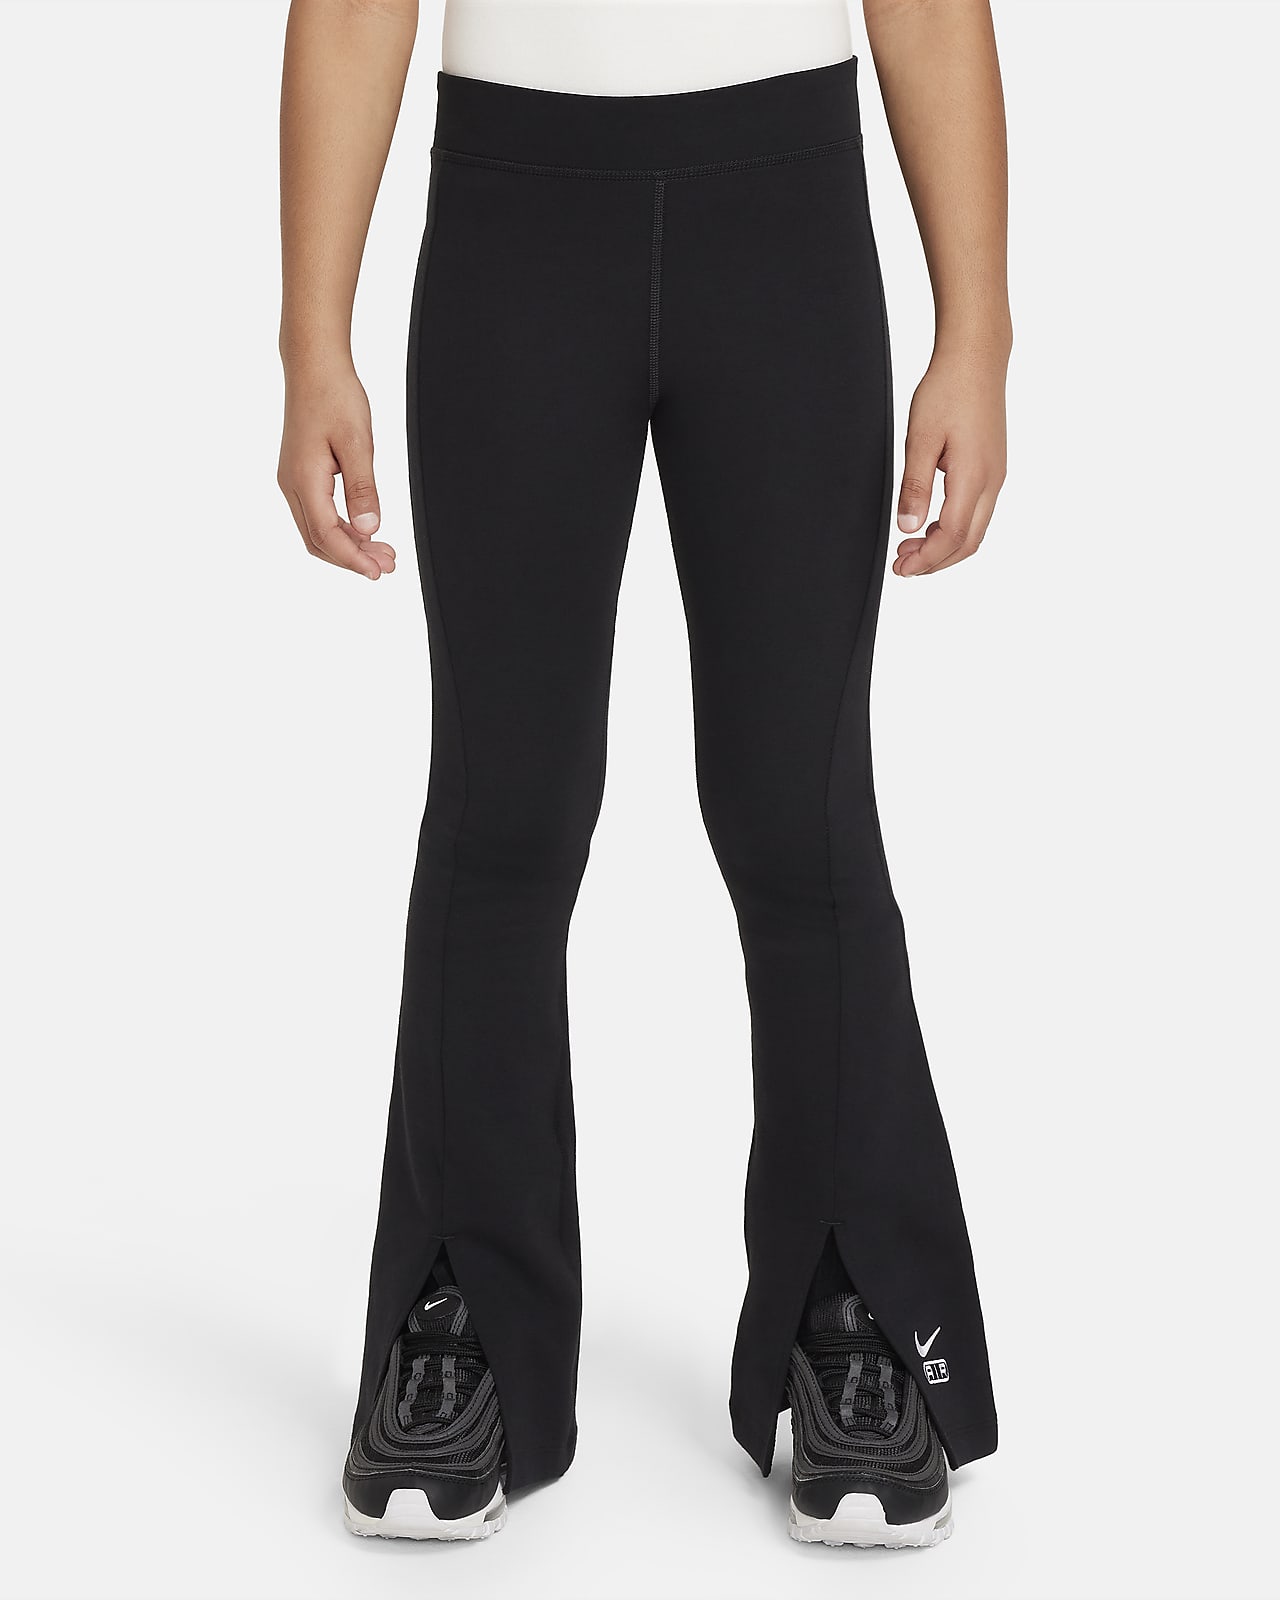 Nike Dri-fit Flare leggings in Black